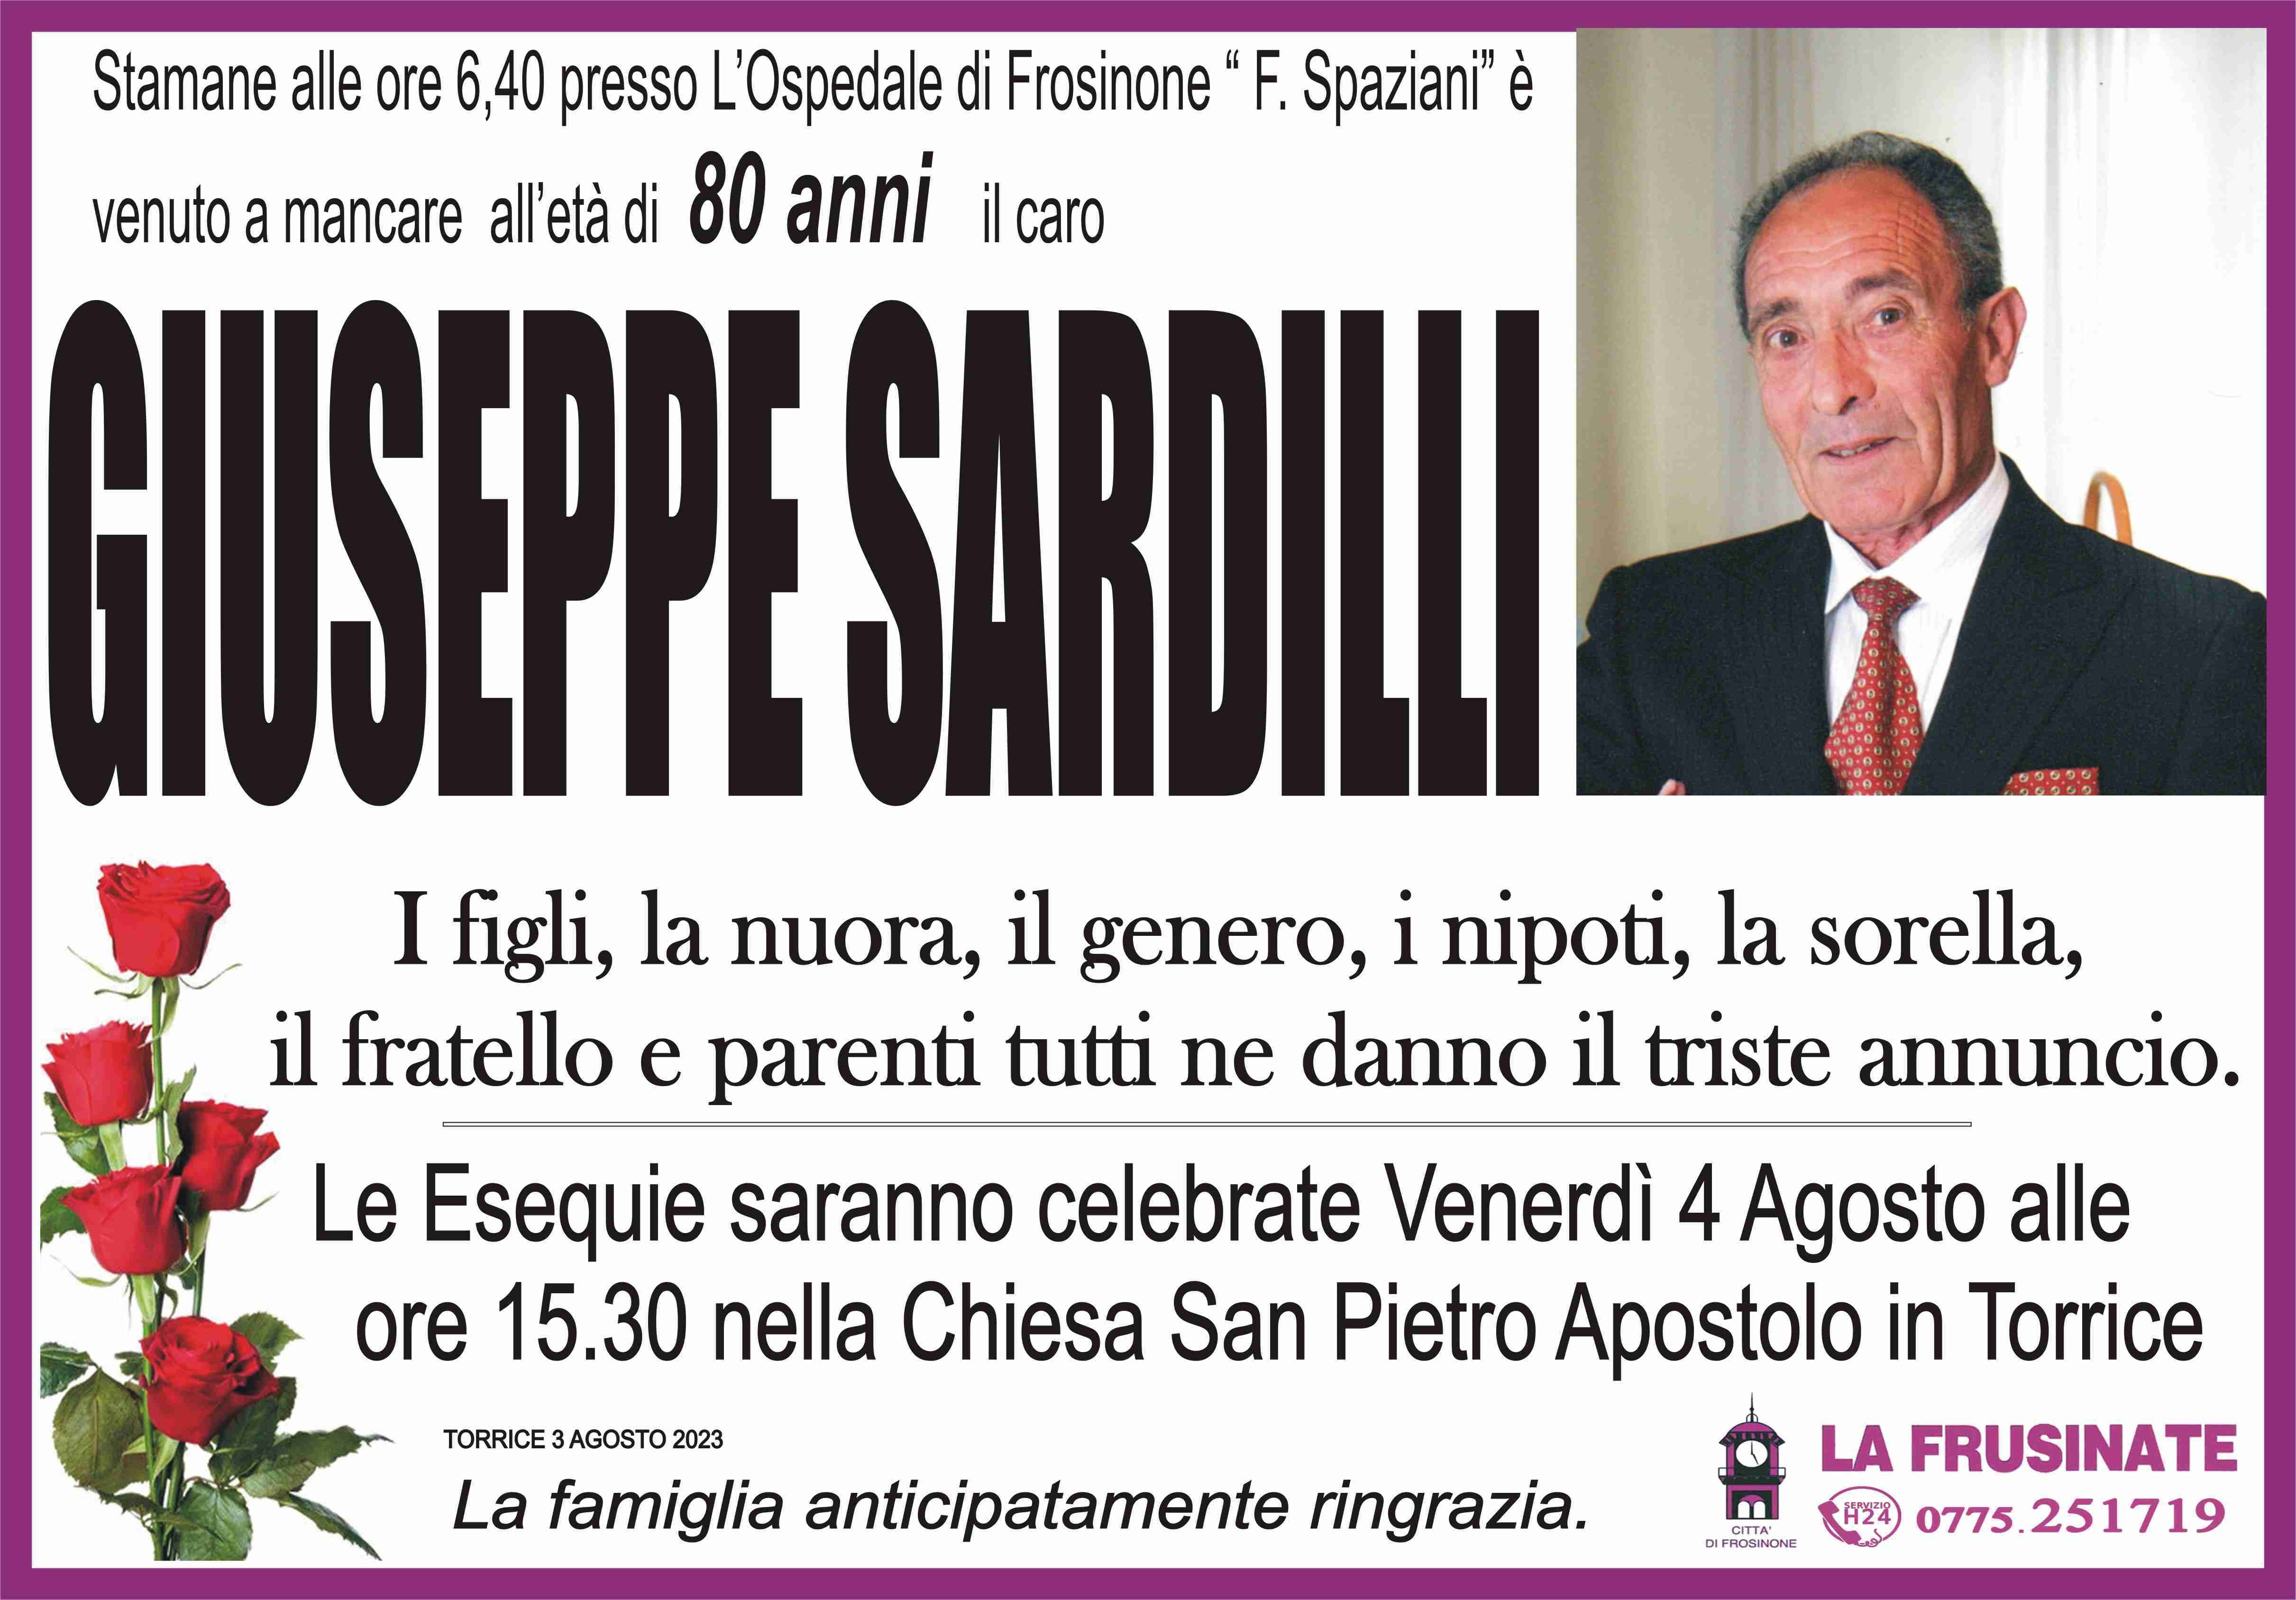 Giuseppe Sardilli